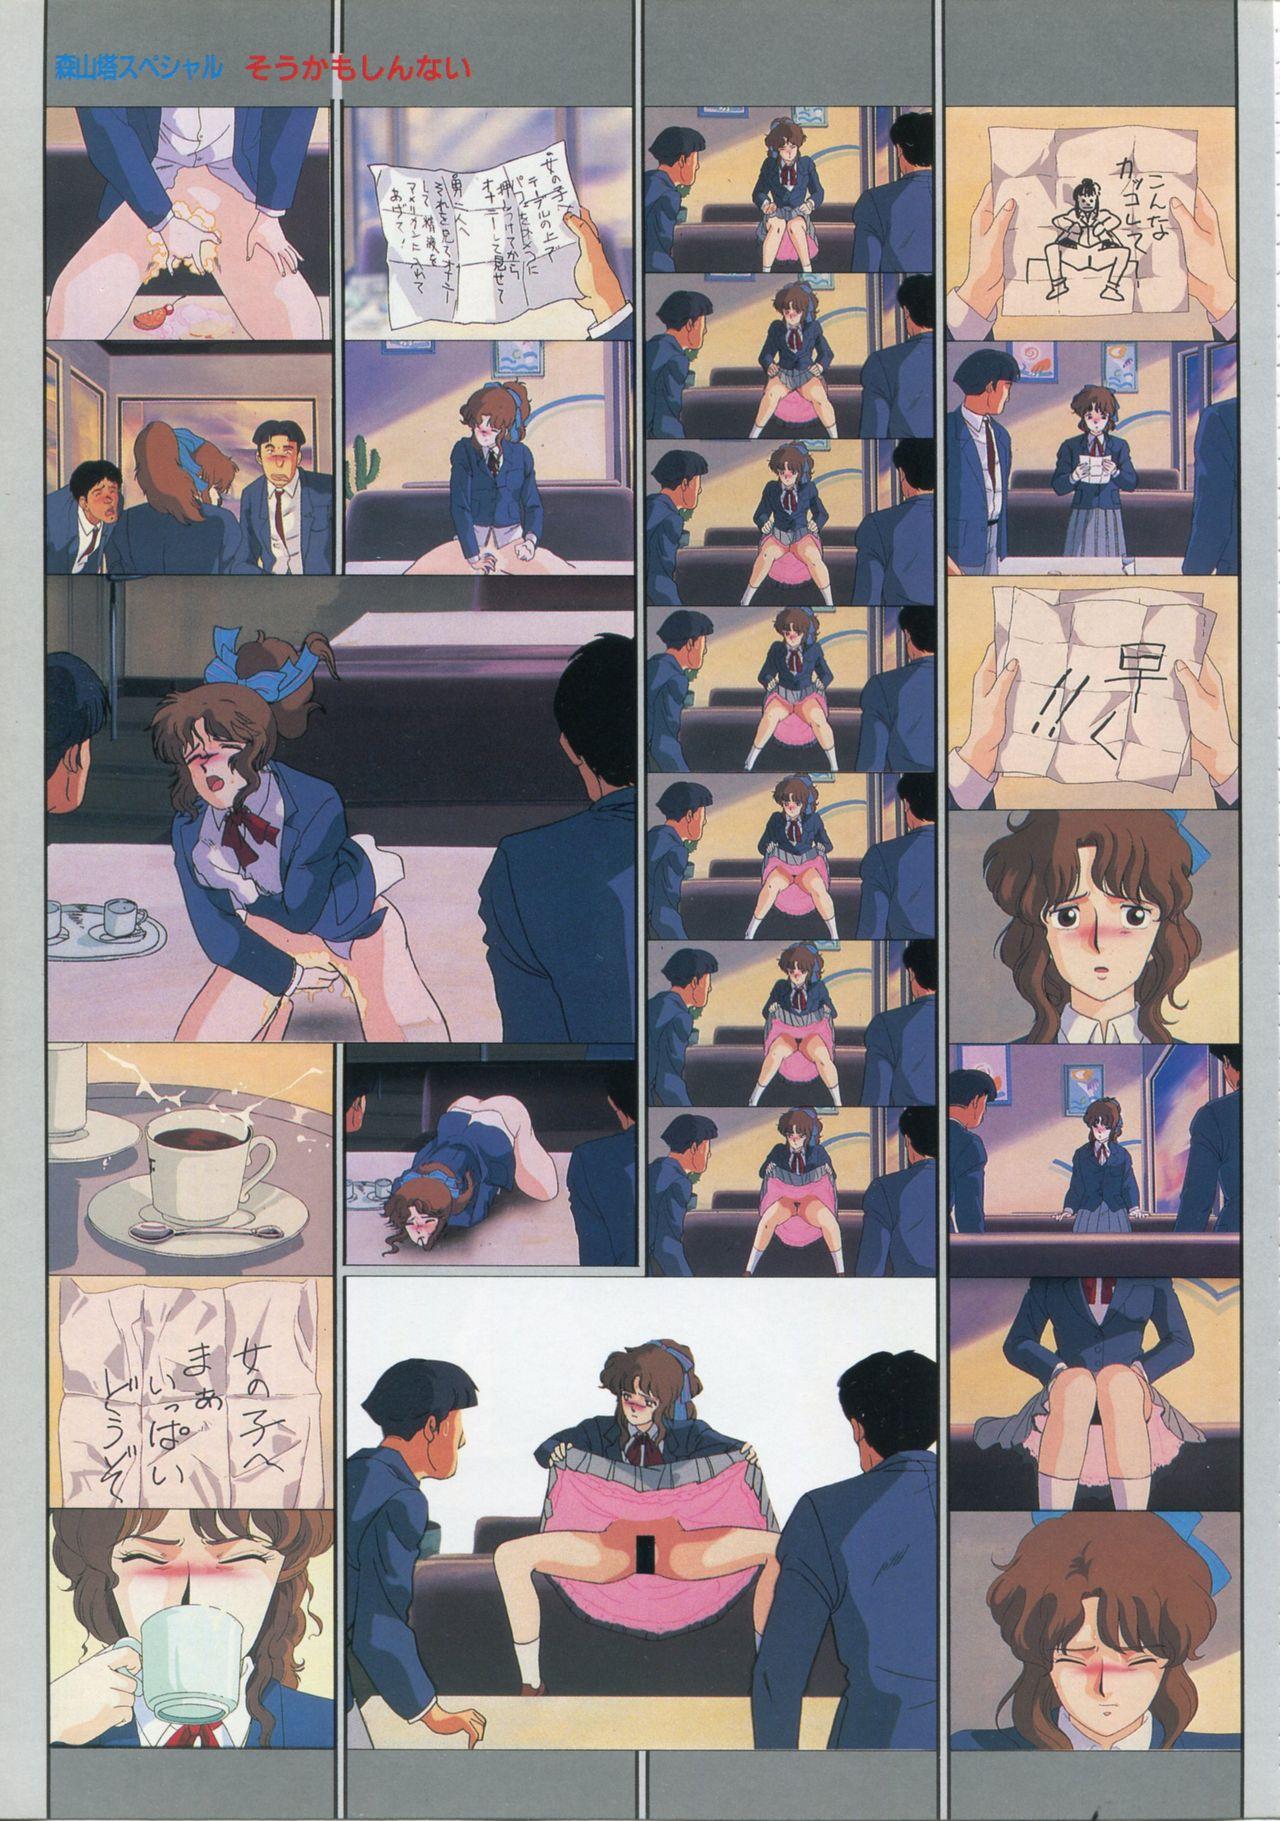 Bishoujo Anime Daizenshuu - Adult Animation Video Catalog 1991 30